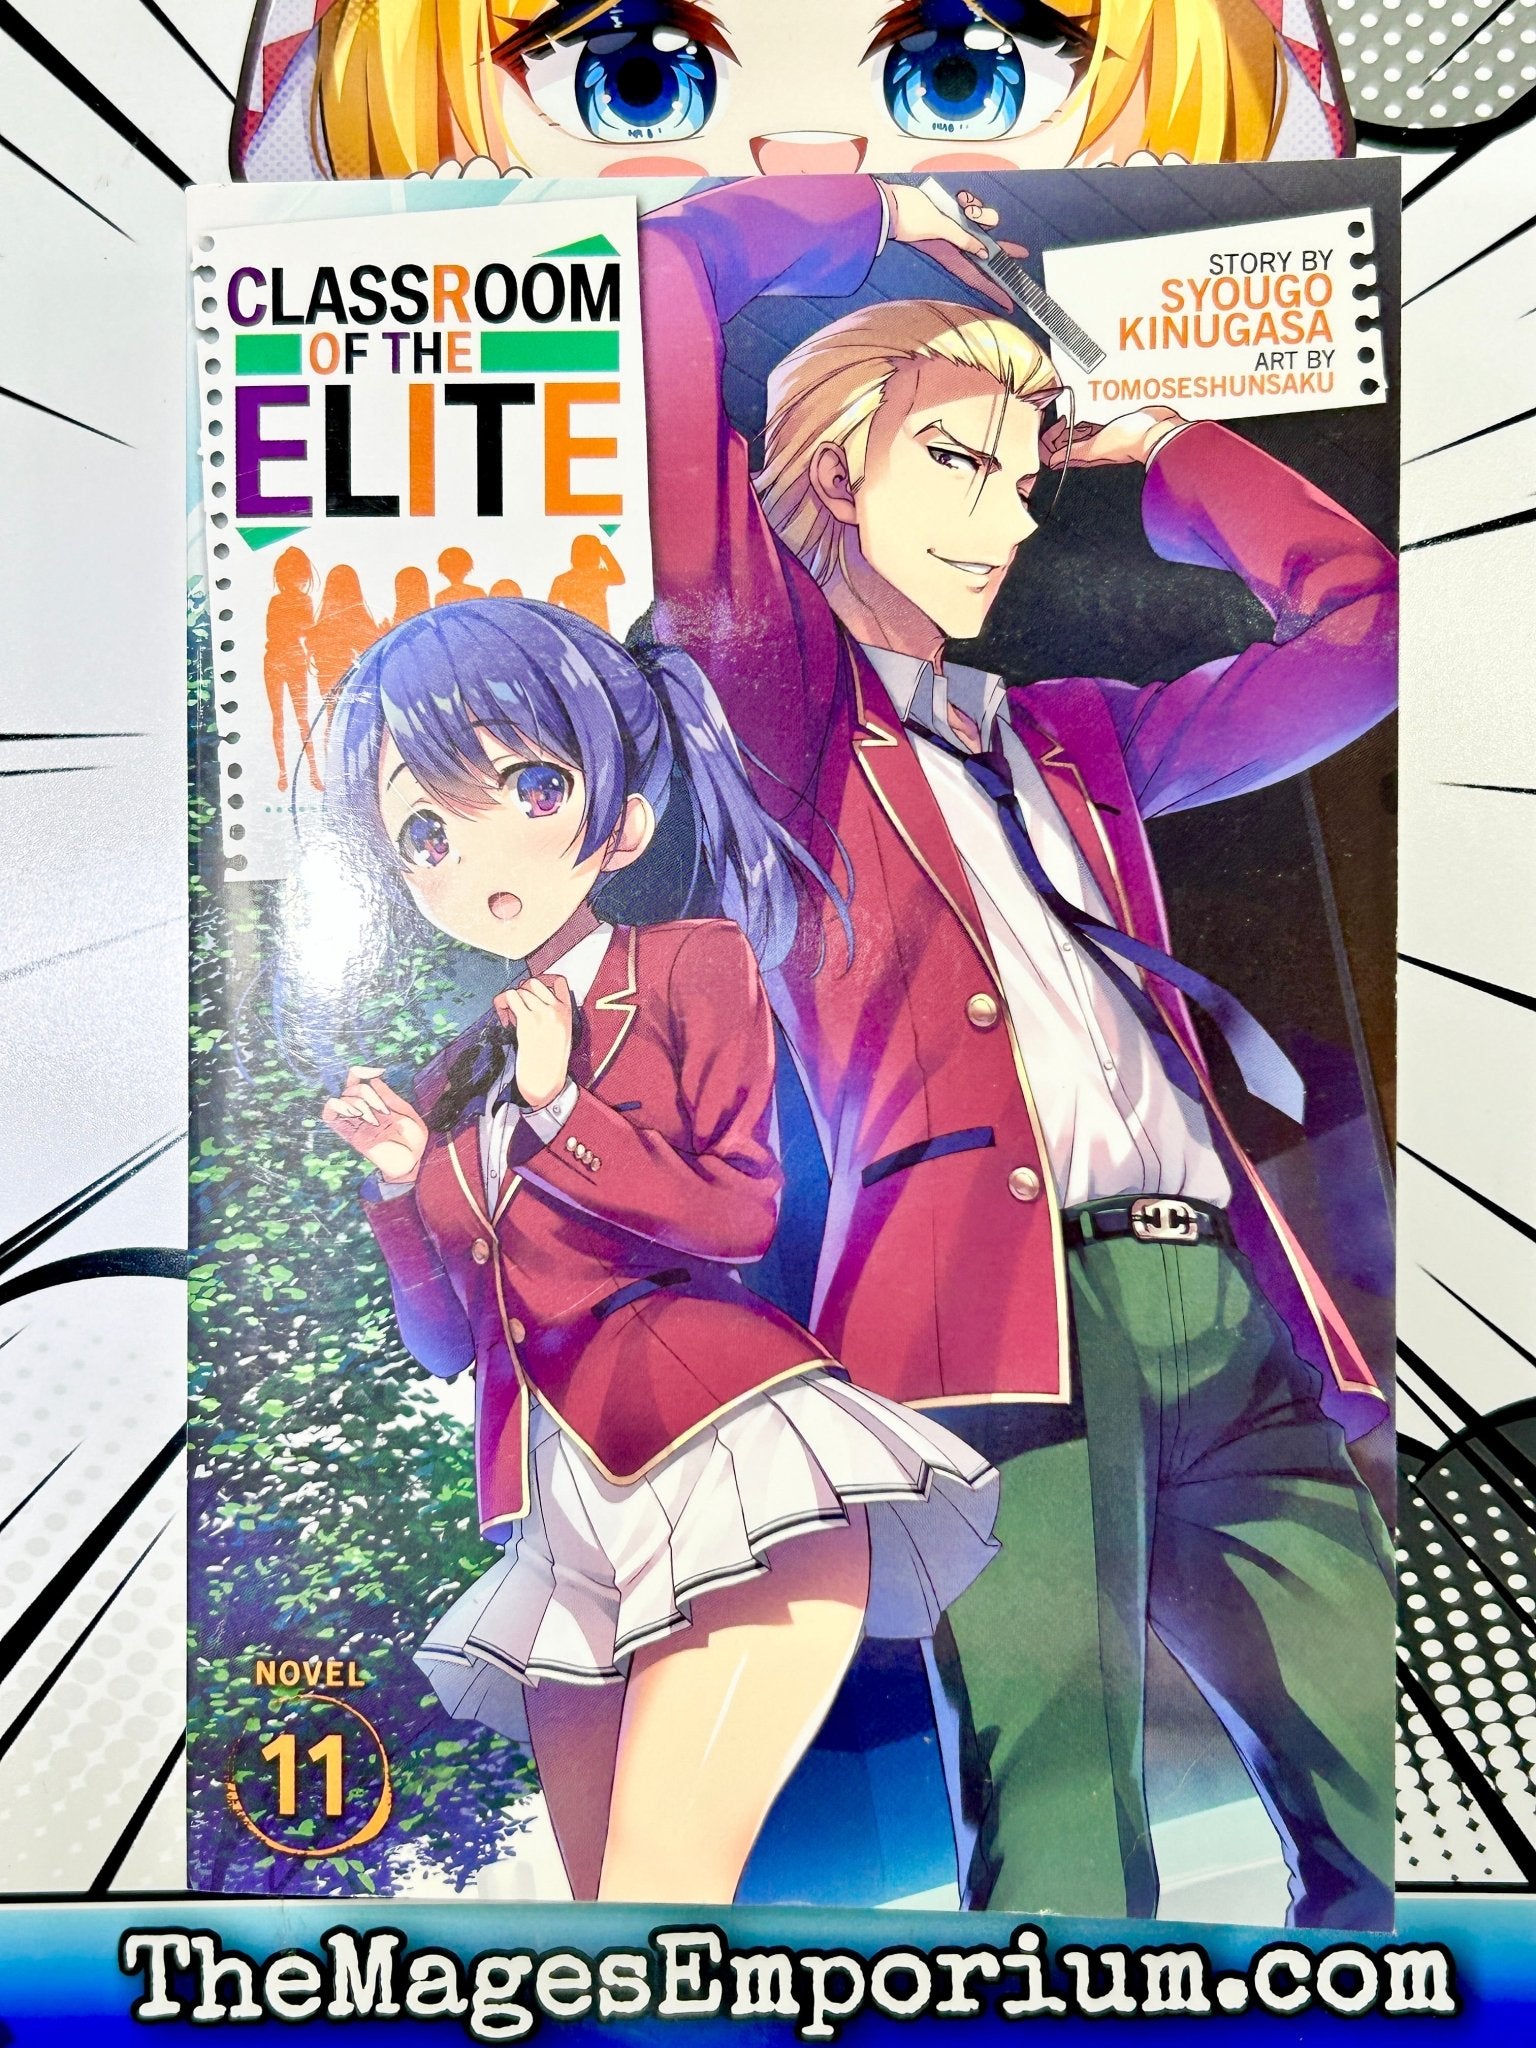 Classroom of the Elite (Light Novel) Vol. 11 by Syougo Kinugasa,  Tomoseshunsaku, Paperback